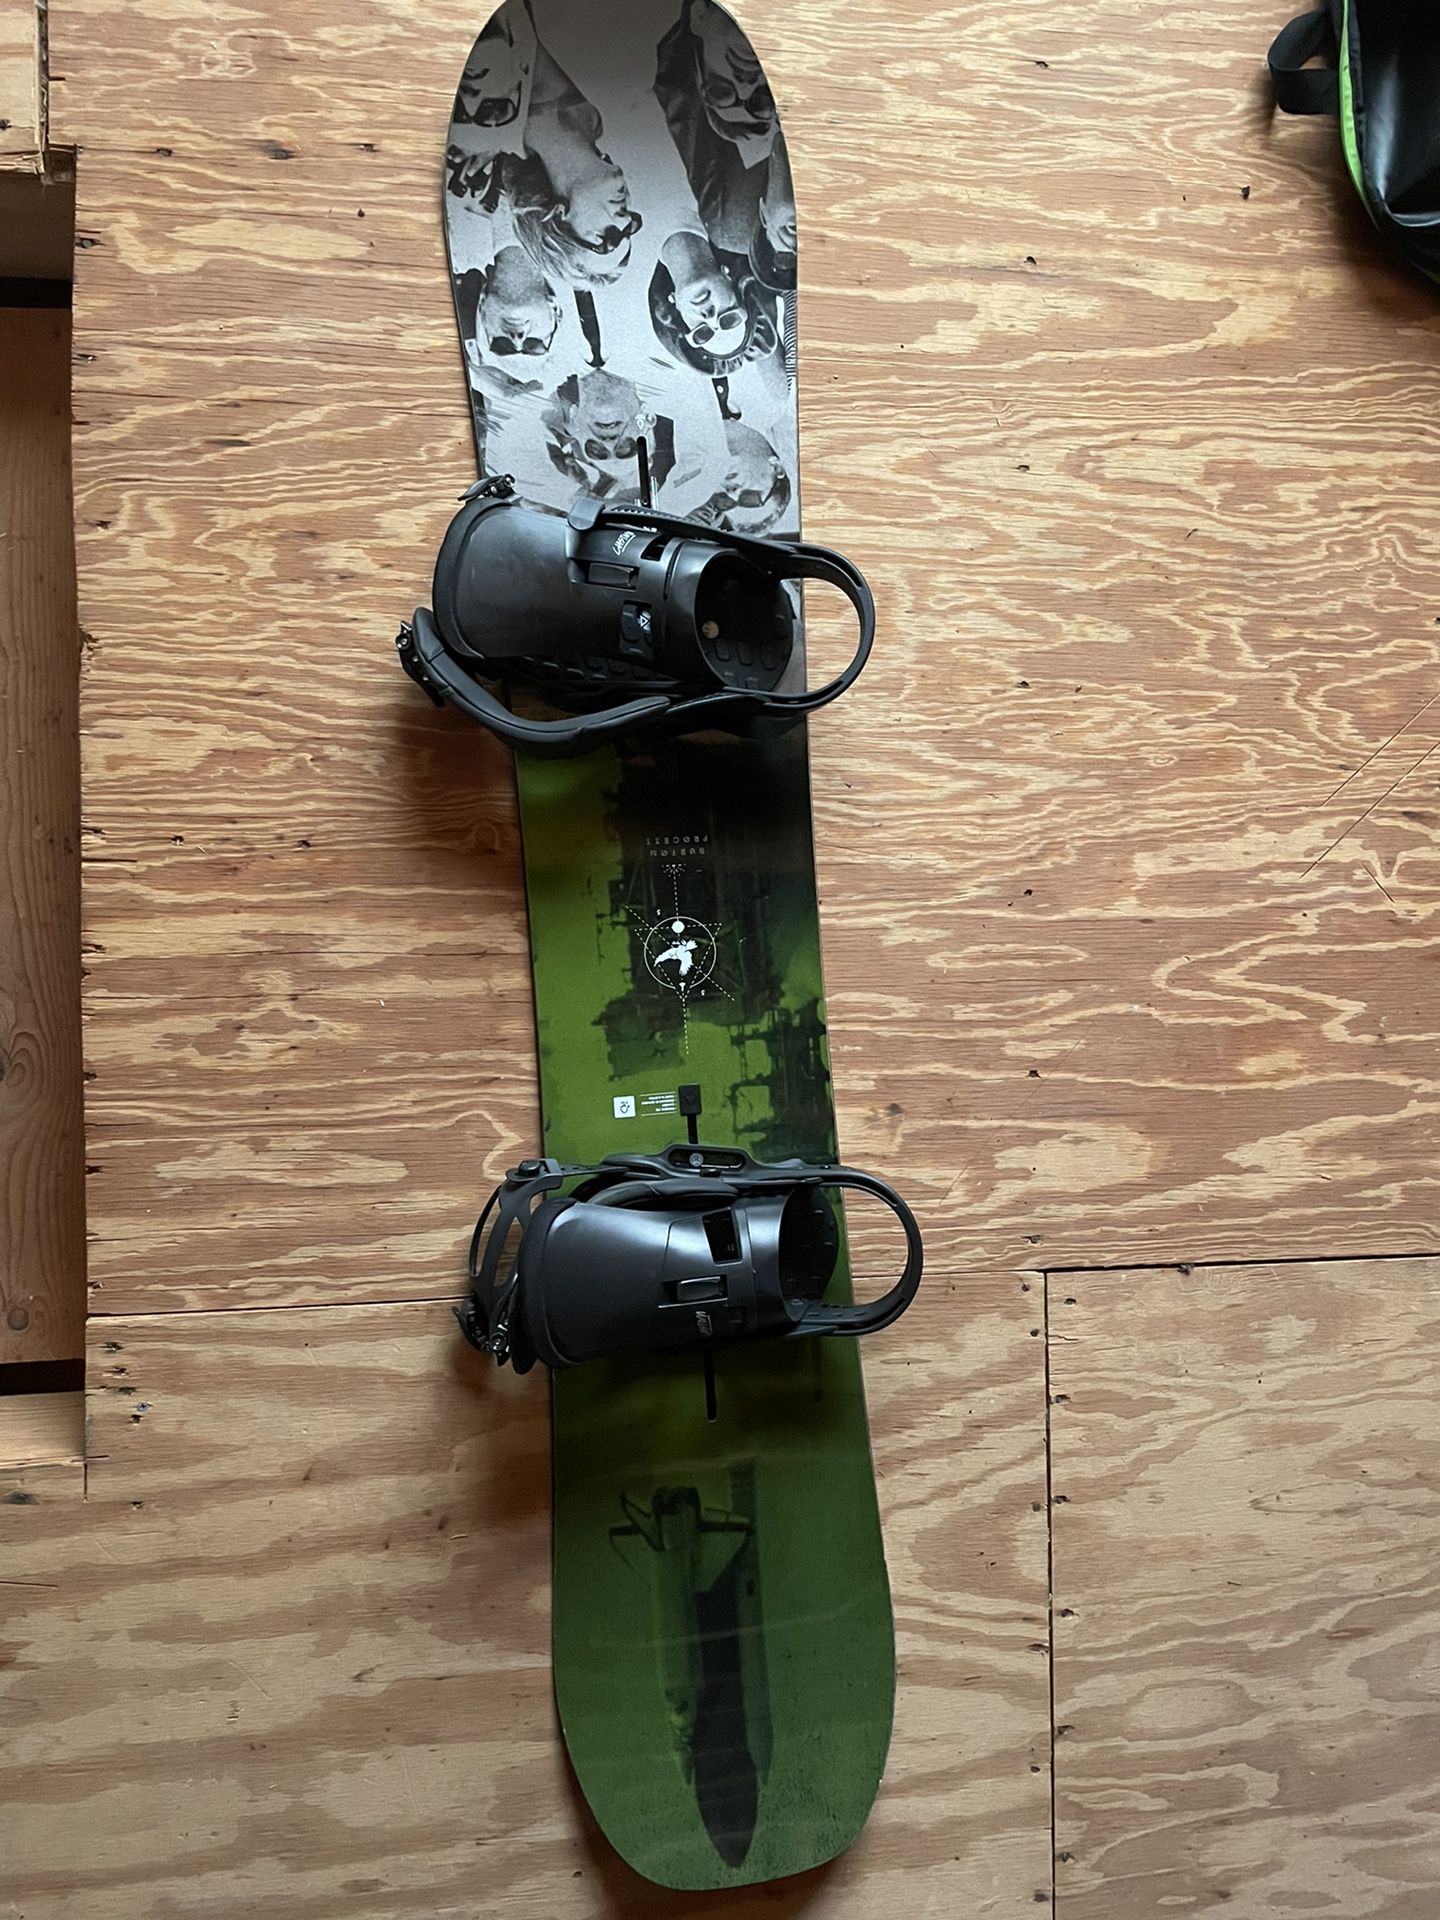 Burton Process 155 Camber Snowboard With Bindings And Bag  